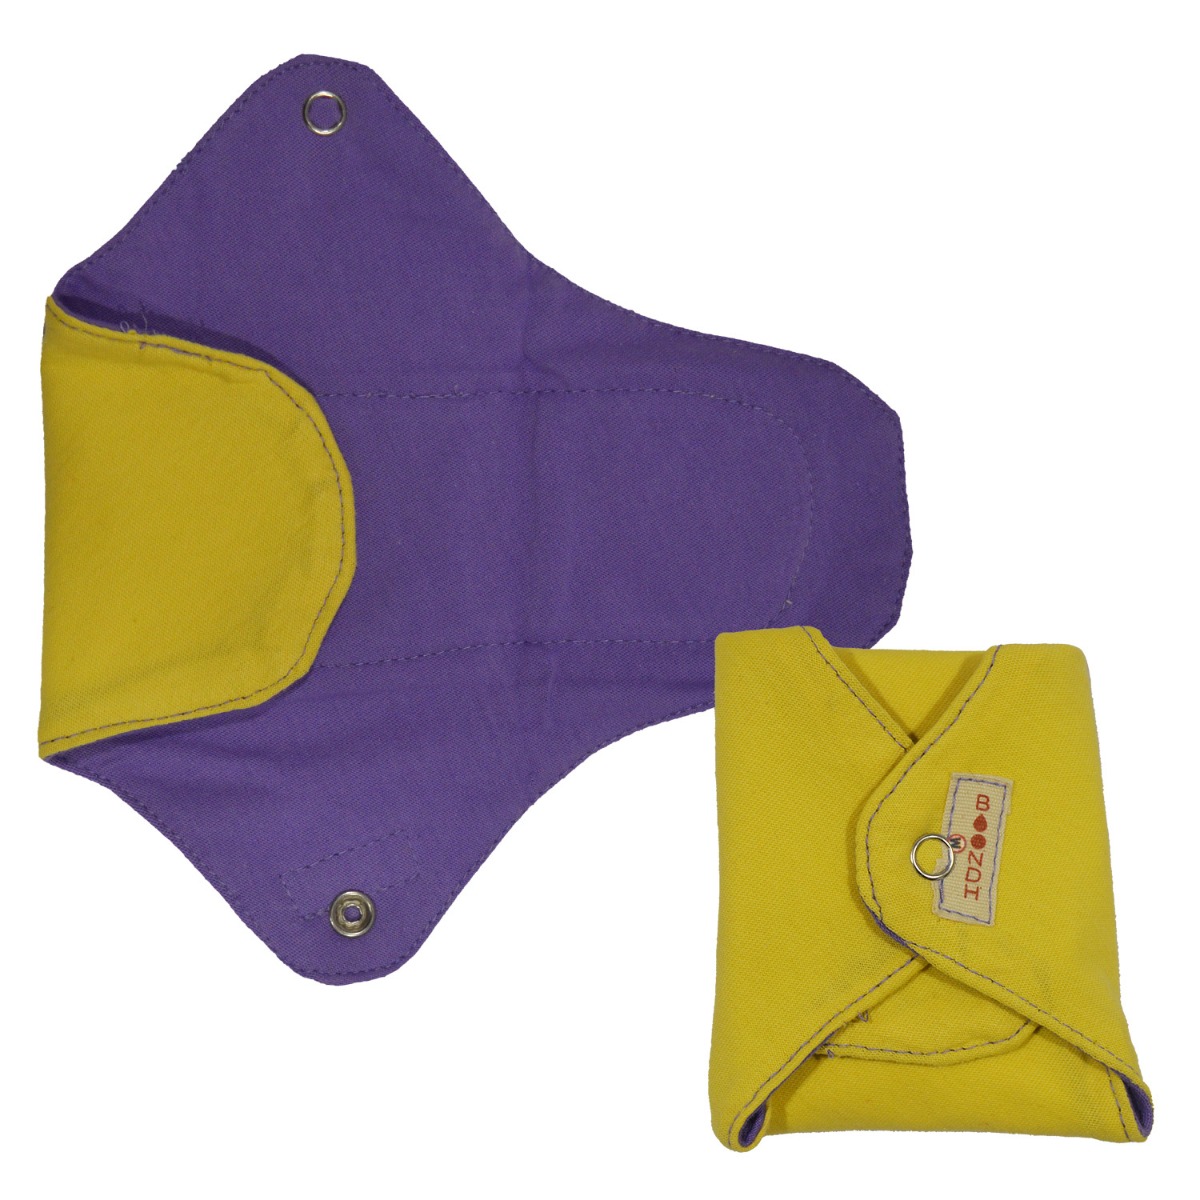 Boondh Cloth Pad: Medium Size - Twilight Mauve